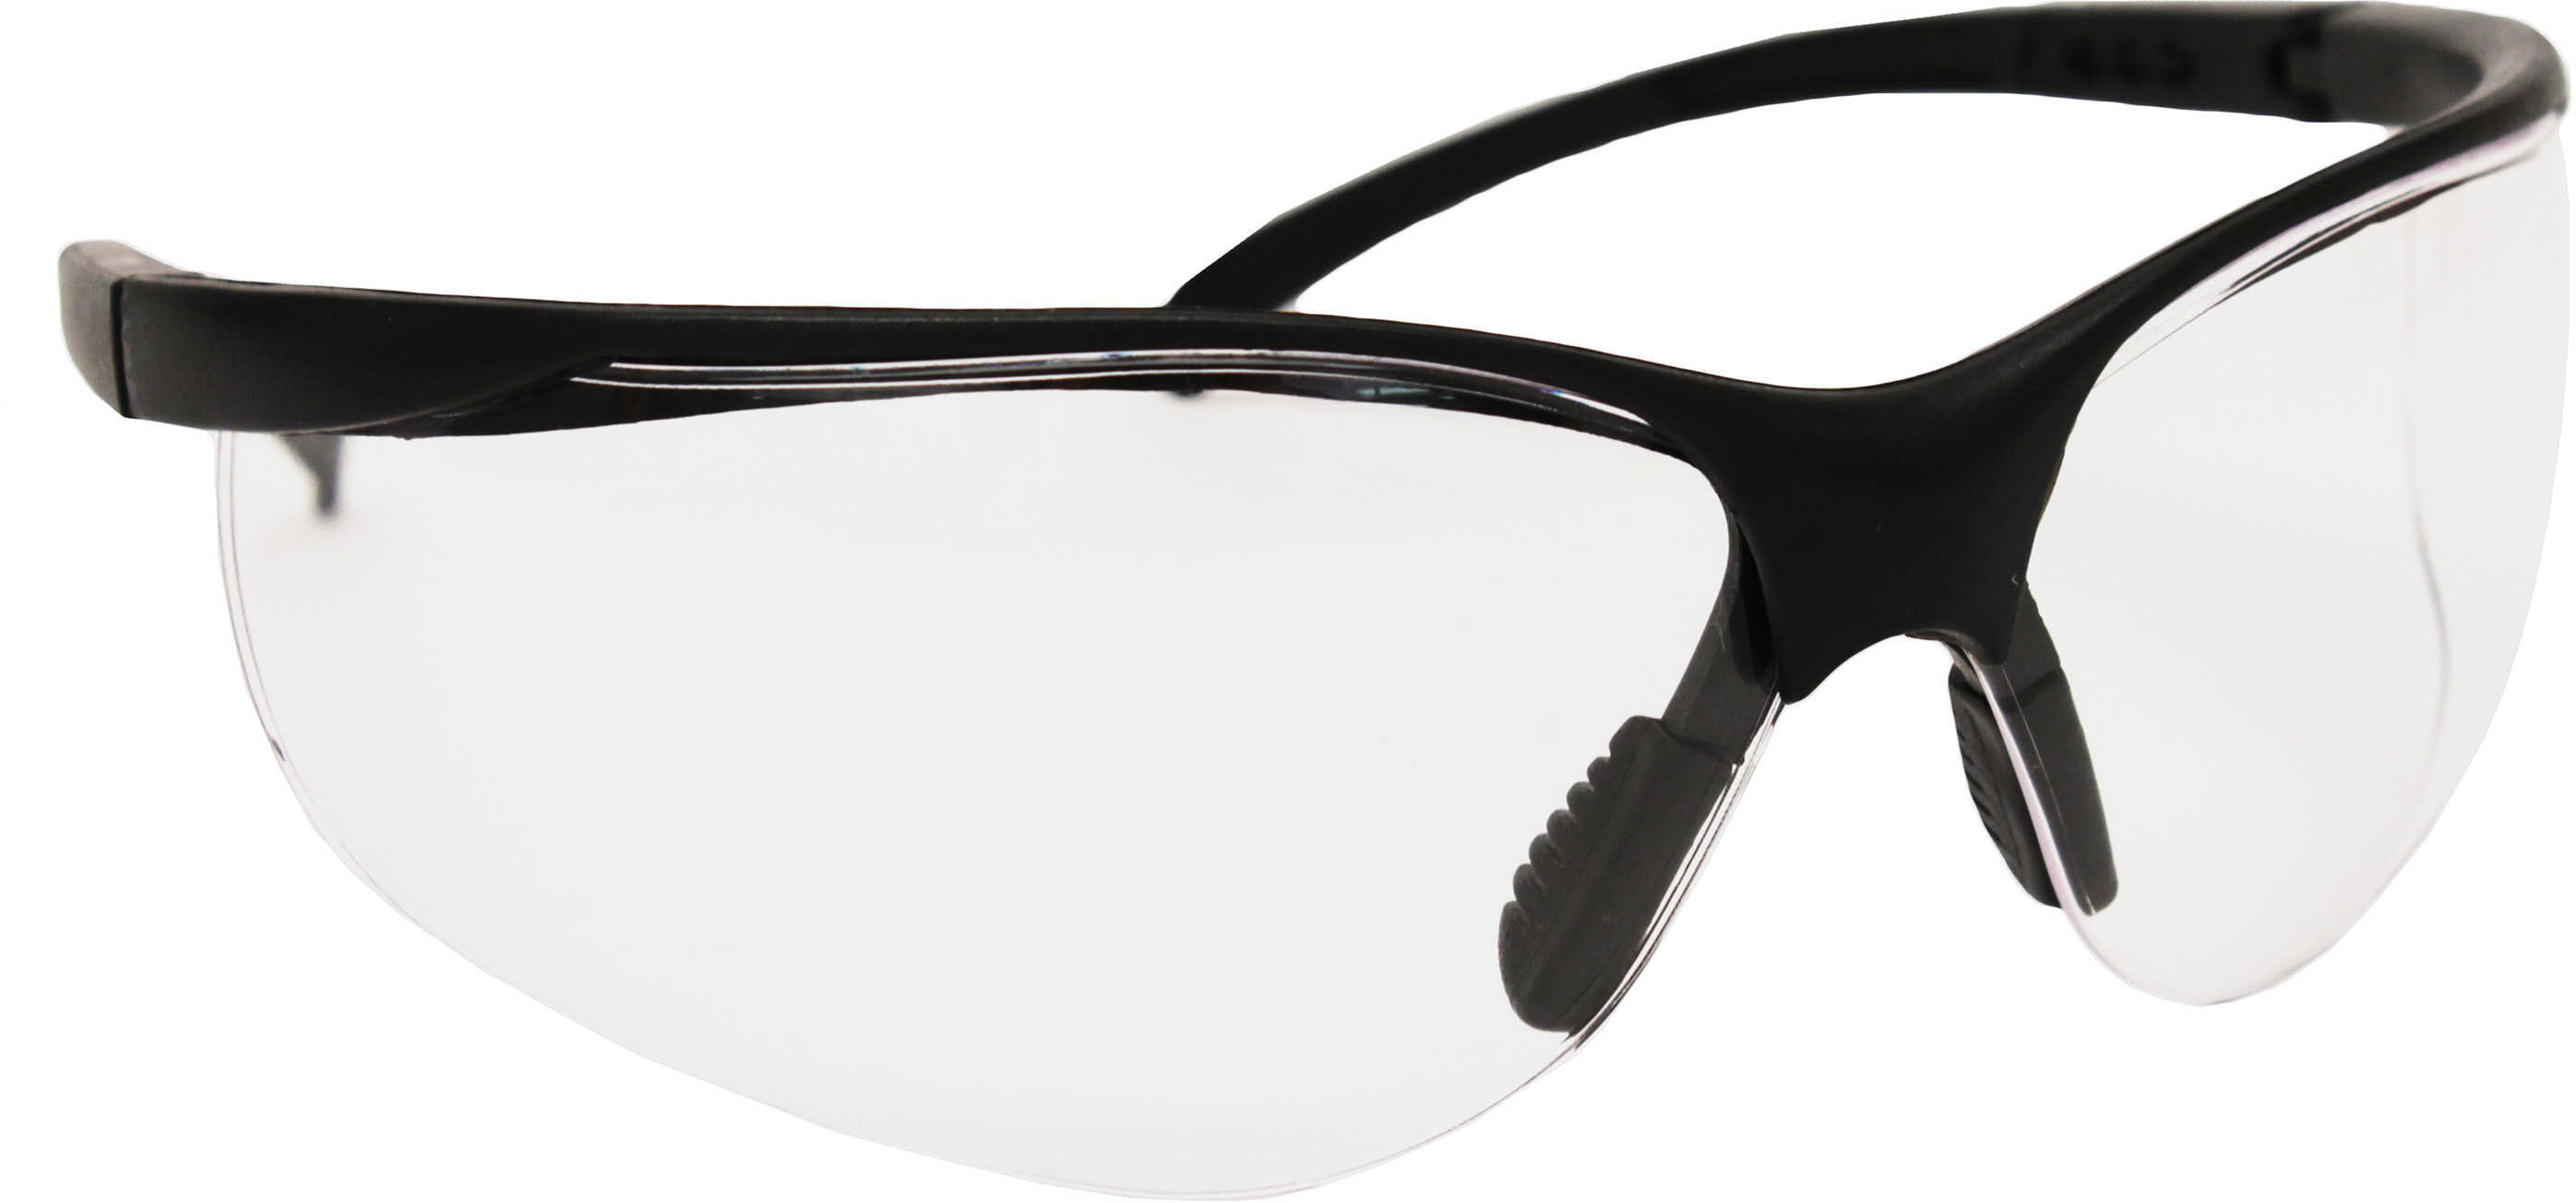 Caldwell Pro Range Glasses Clear (12)